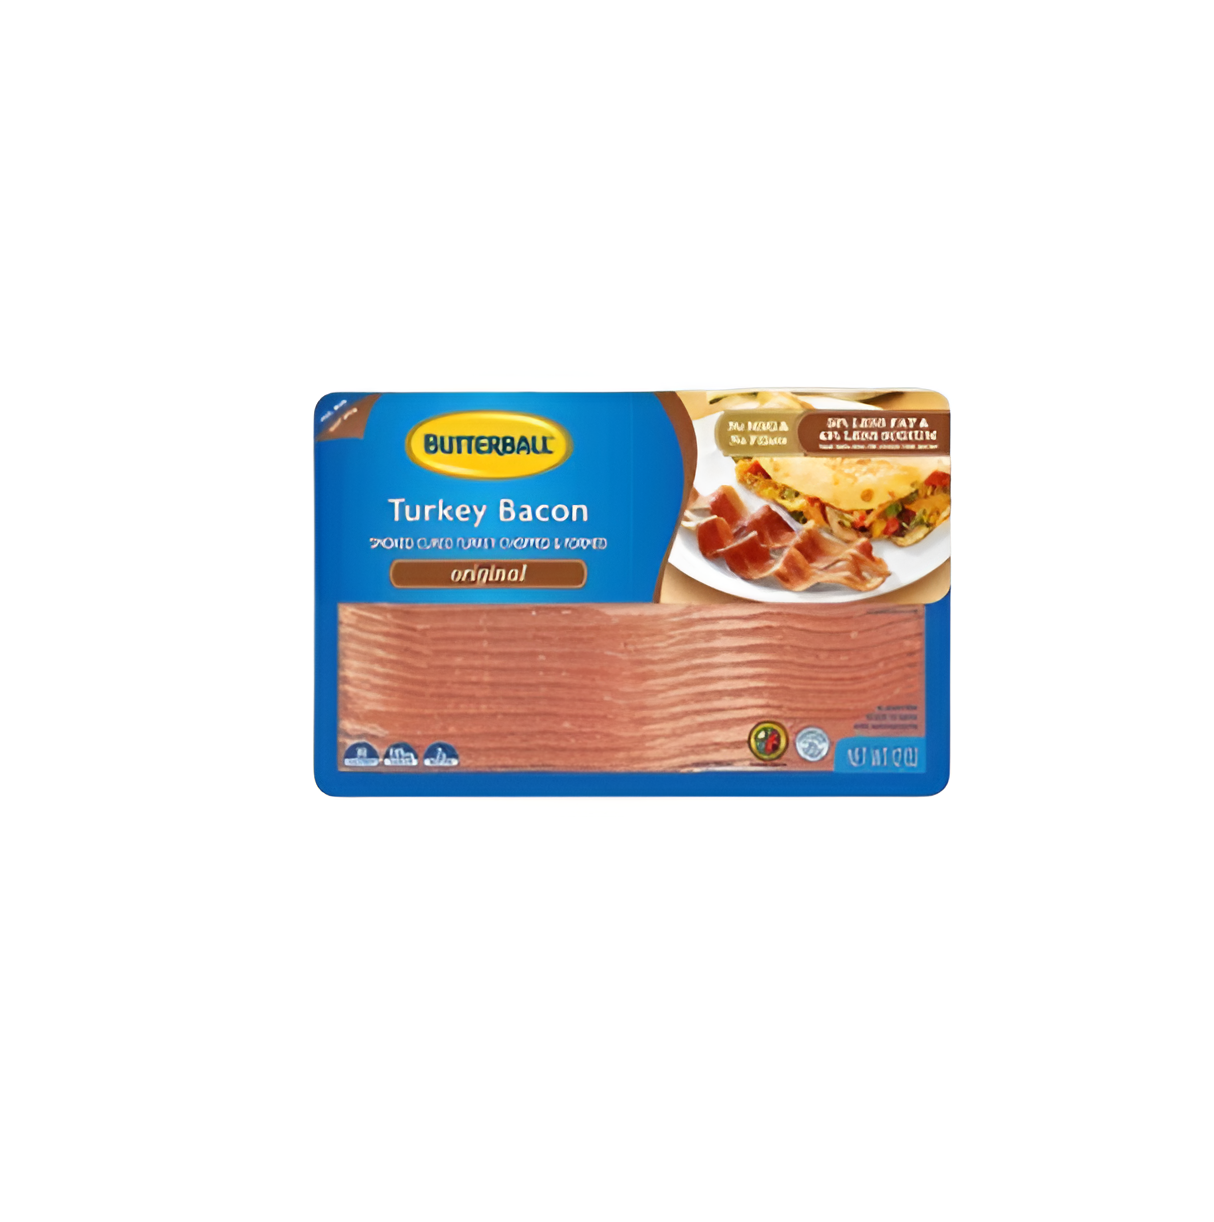 Butterball Turkey Bacon (db030558)